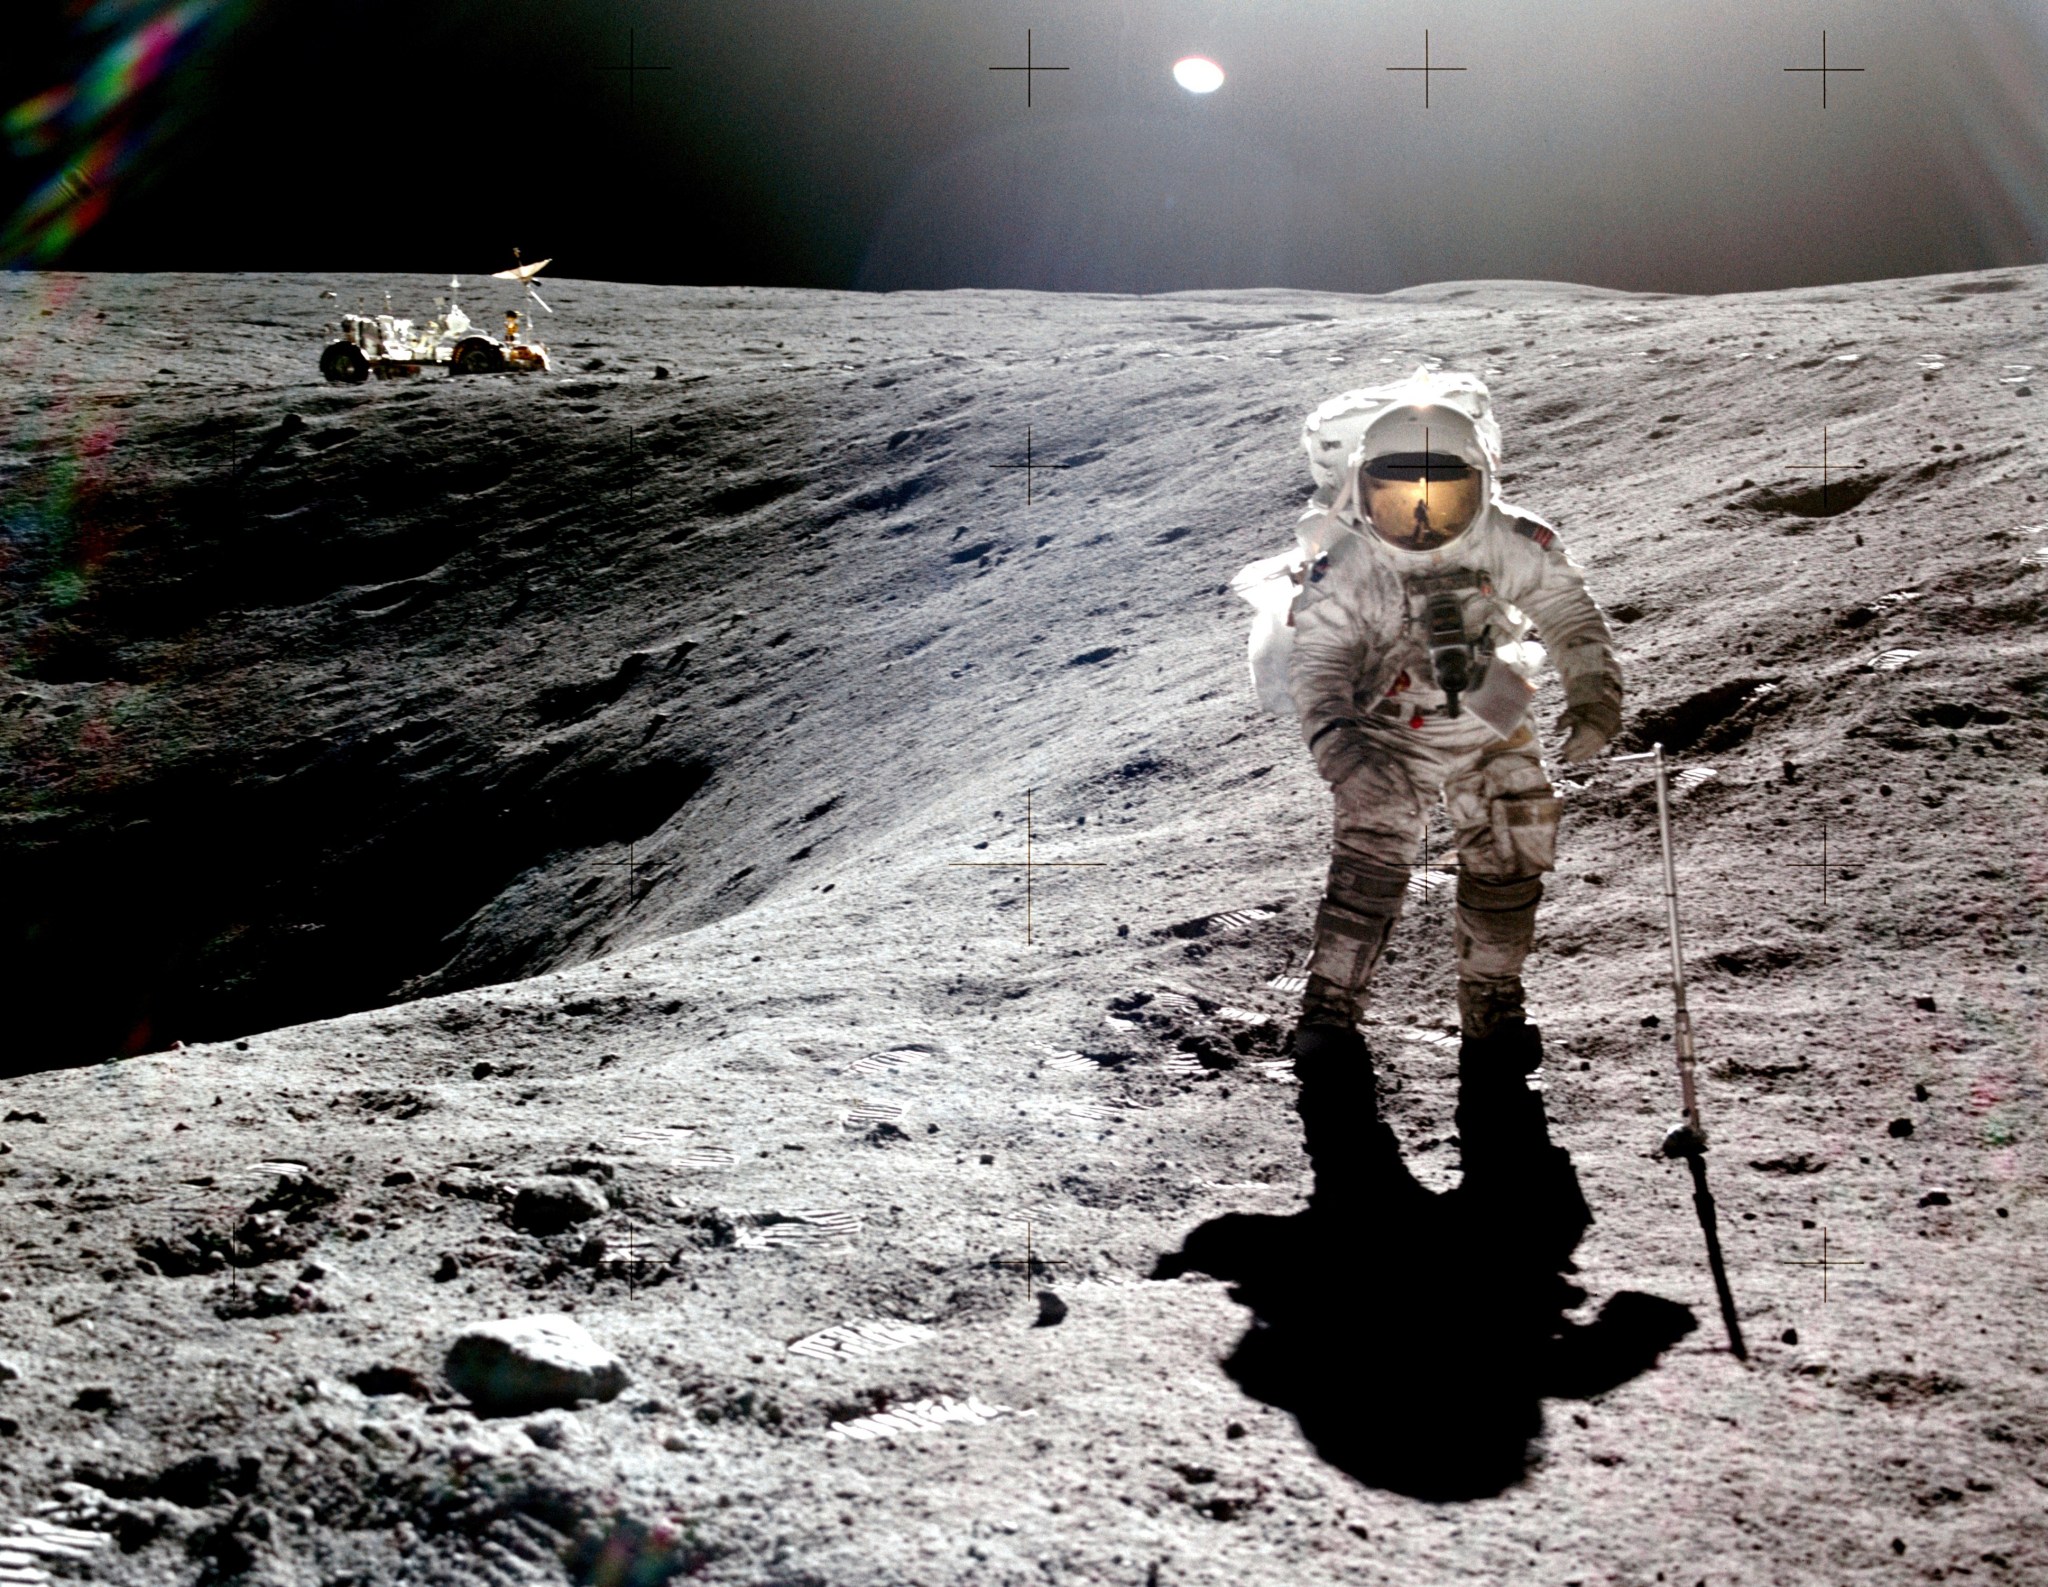 Apollo 16 astronaut Charles Duke on the moon